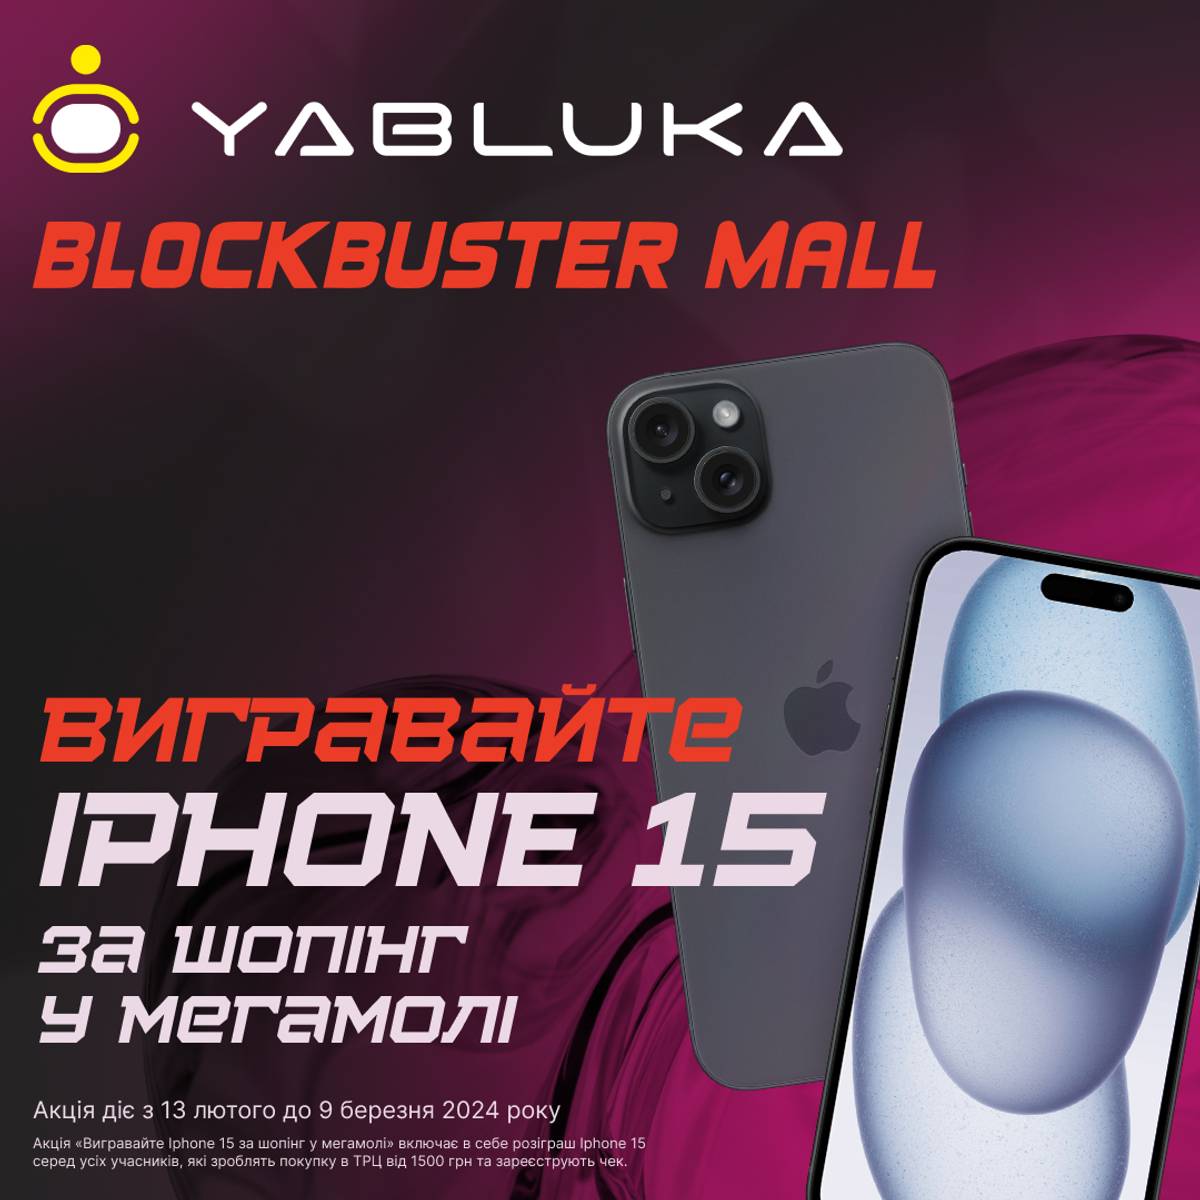 Шопінг у Blockbuster Mall приносить новенький iPhone